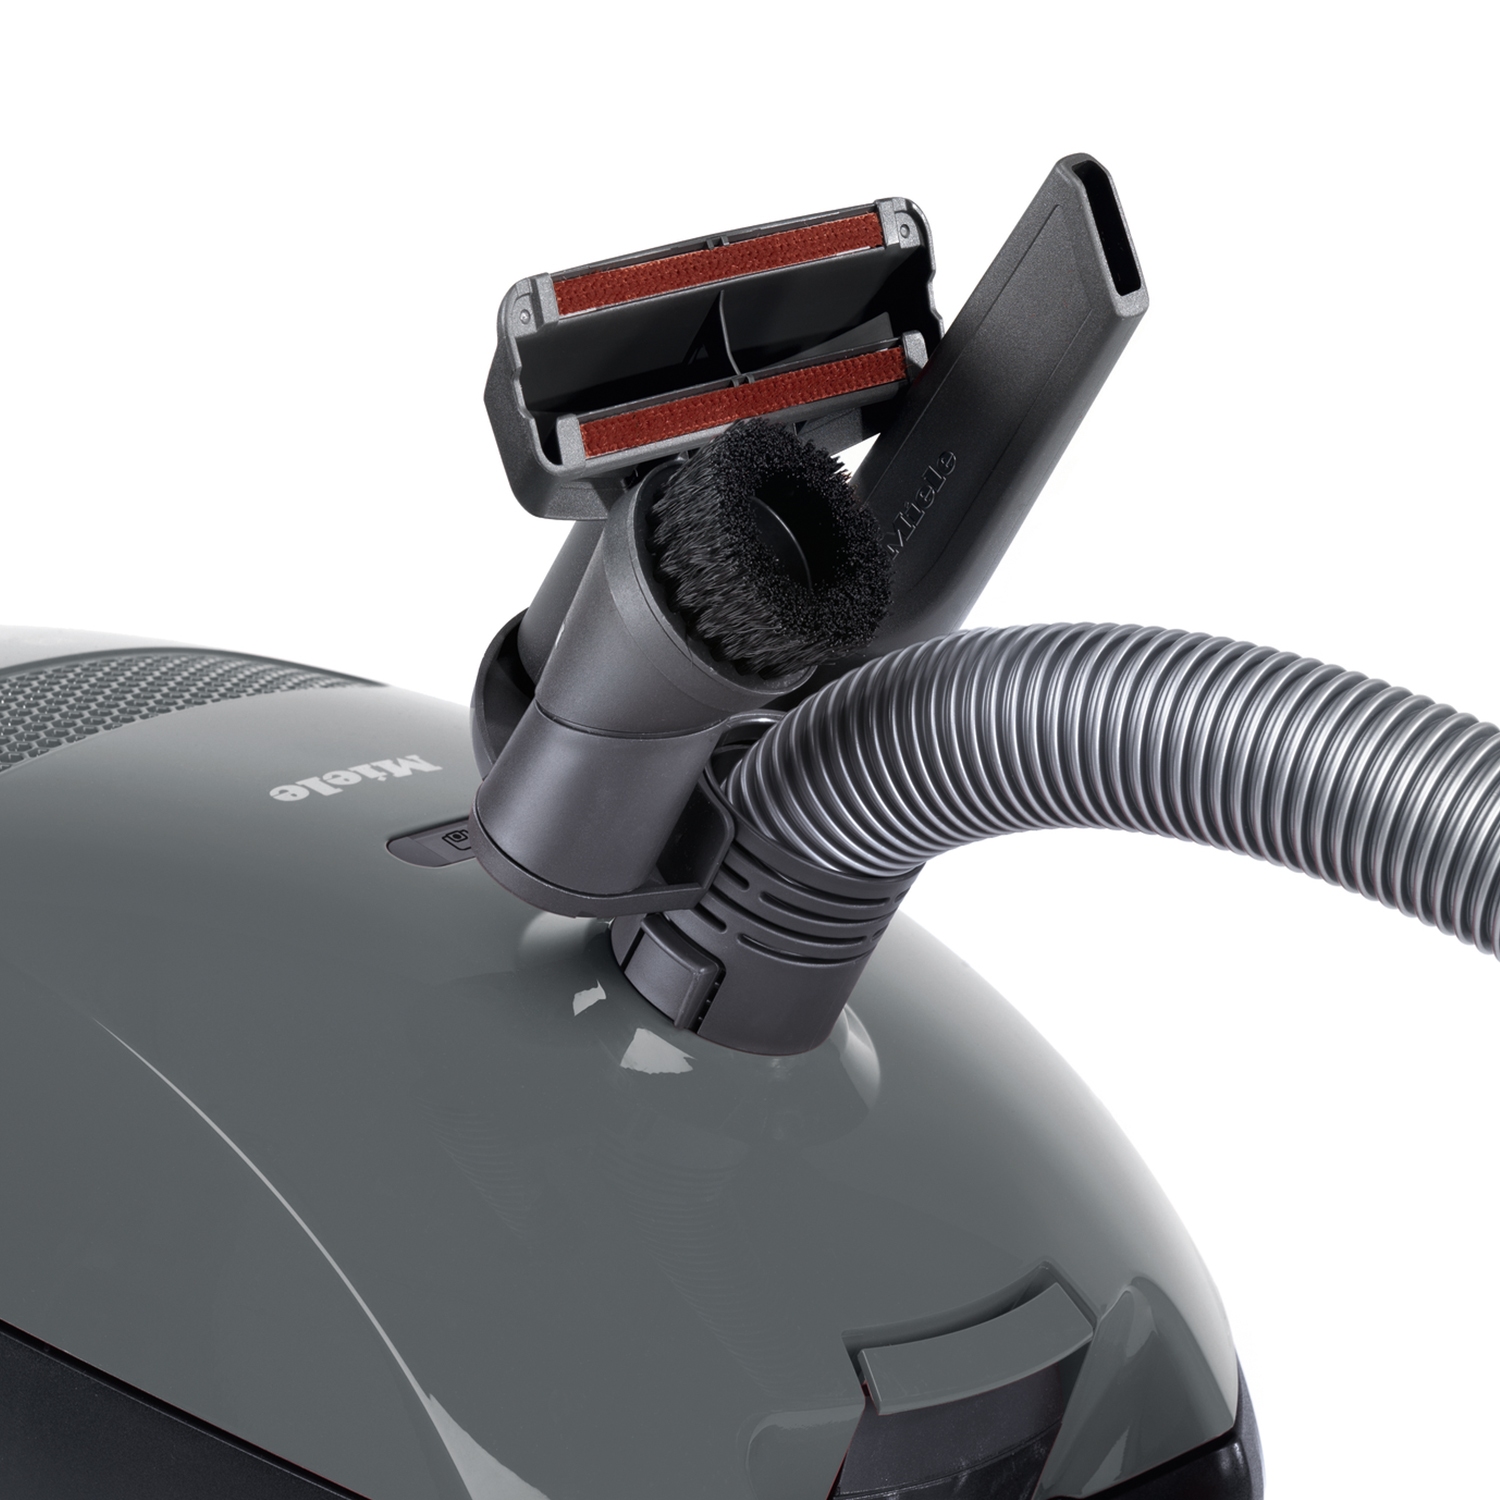 Miele C1POWERLINE Bagged Vacuum Cleaner-Graphite Grey - 3